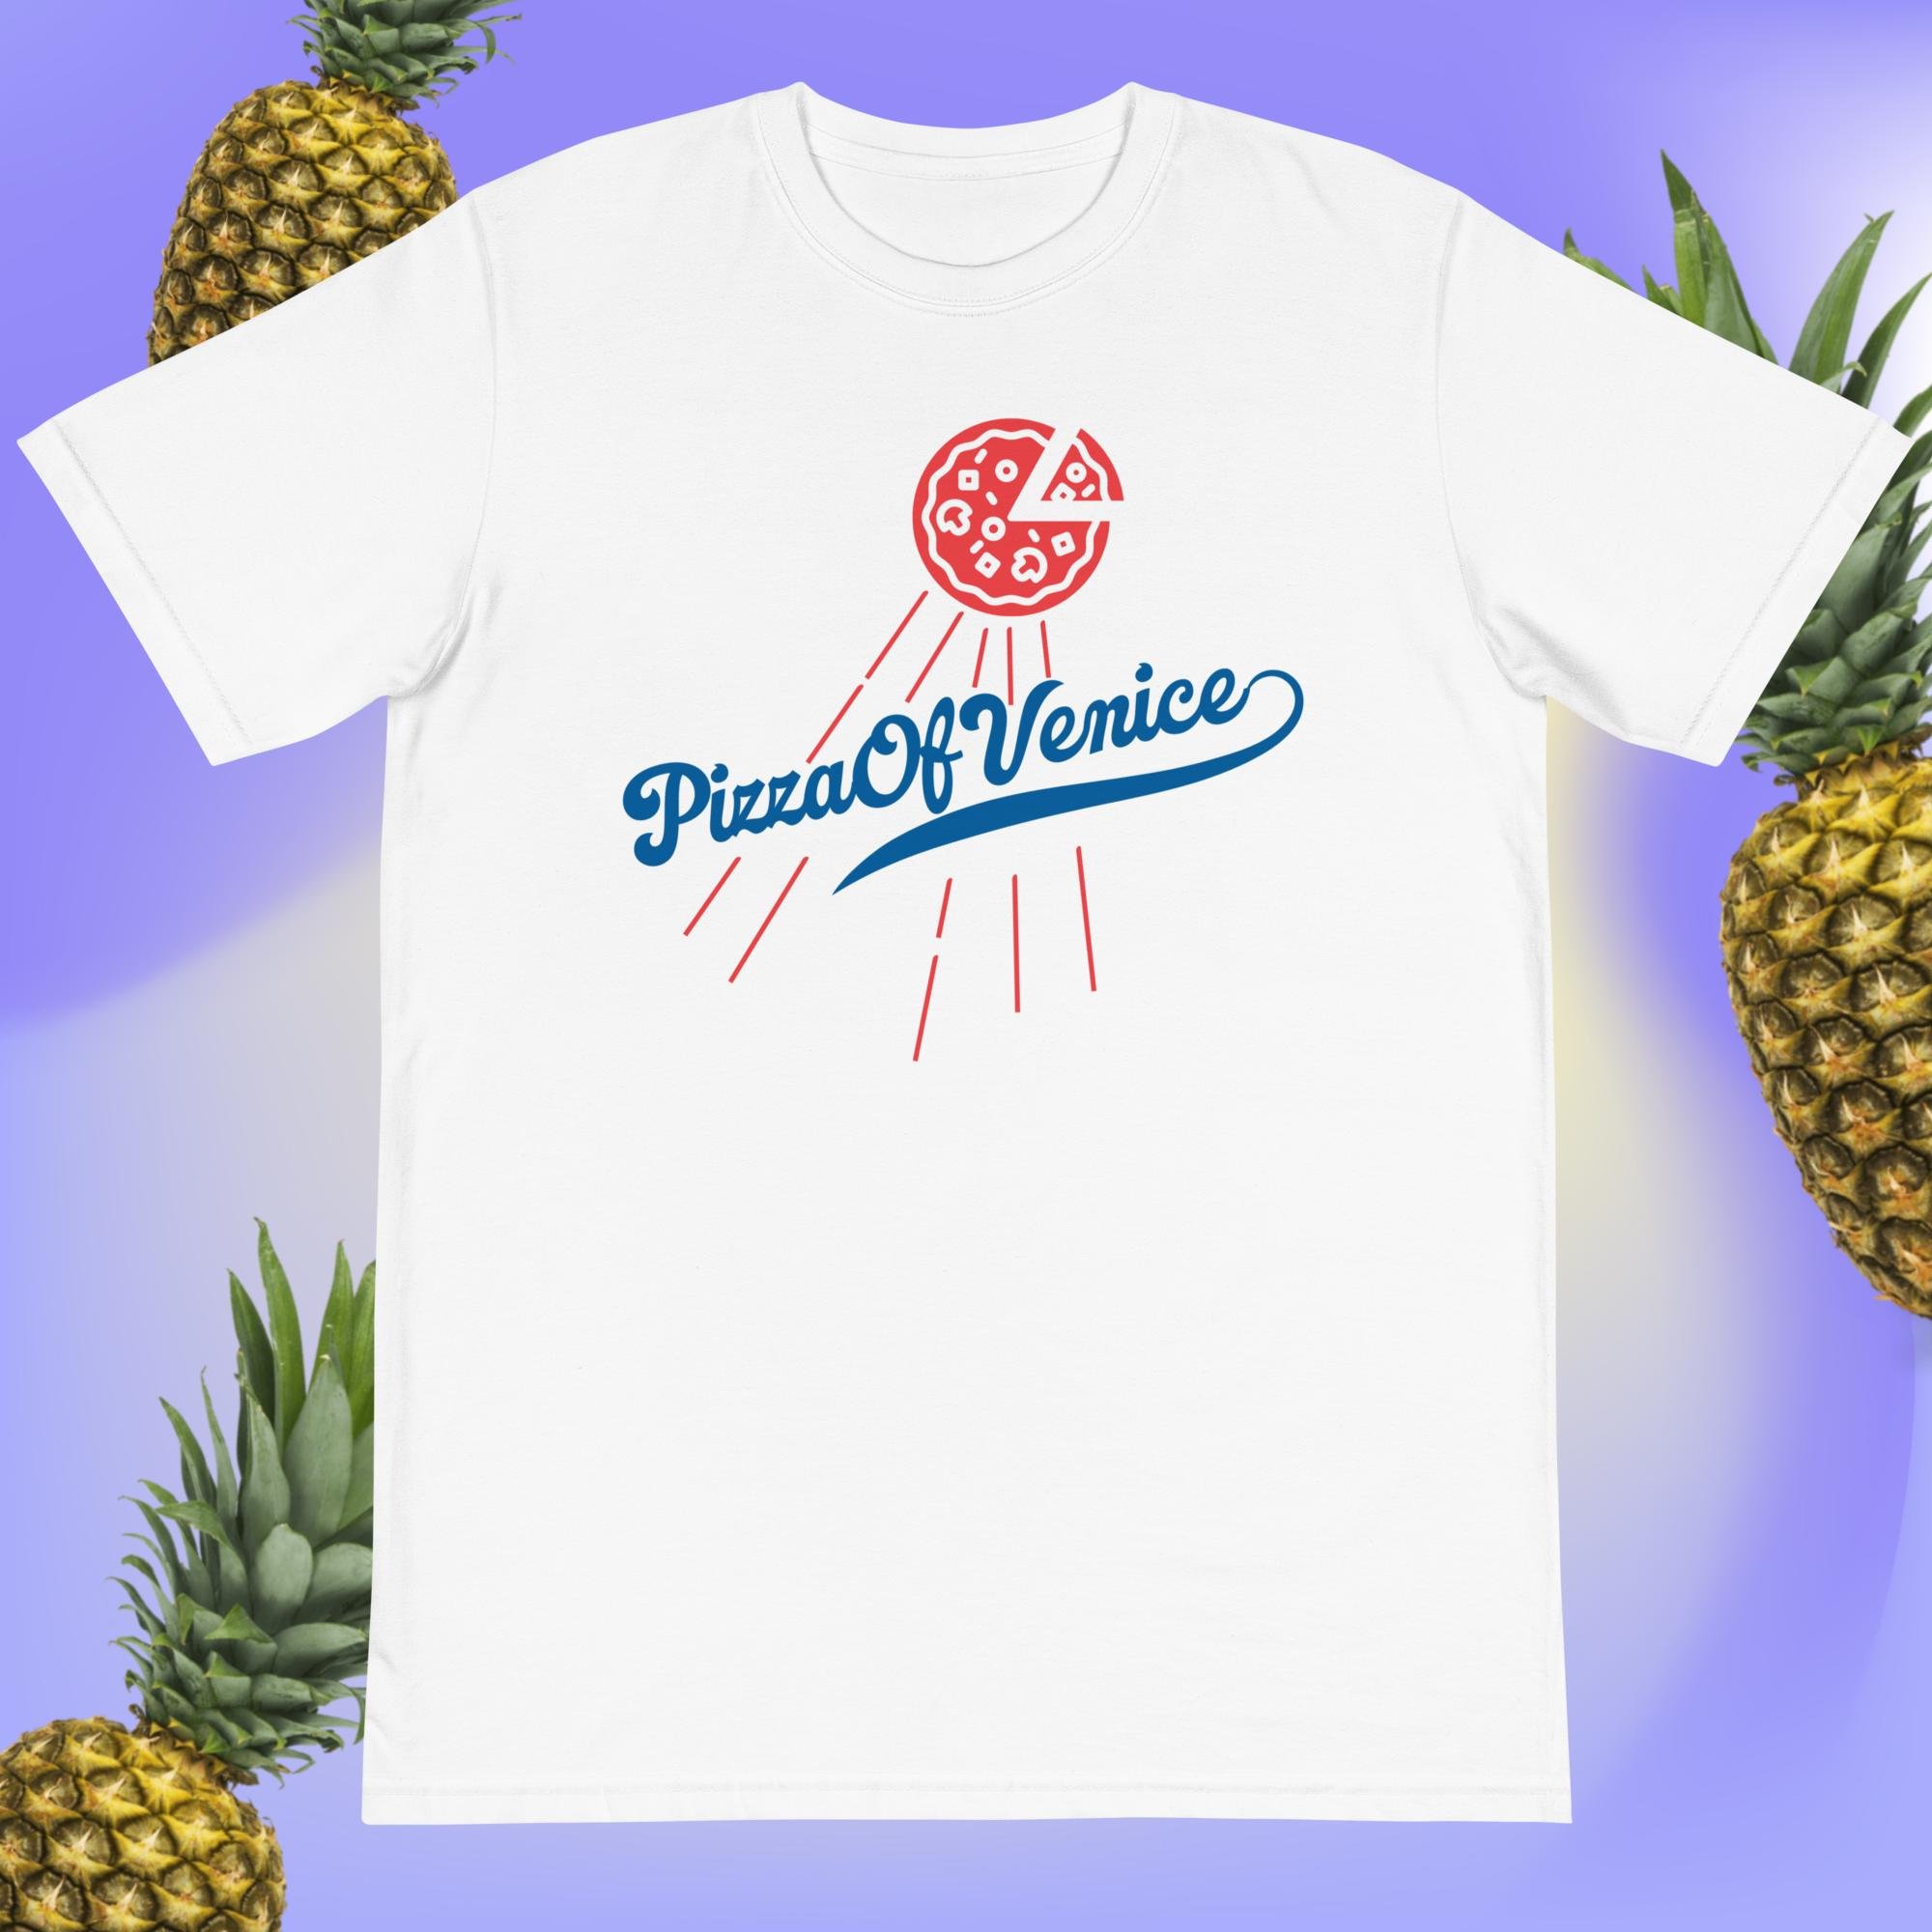 Los Doyers Organic T-Shirt — Pizza Of Venice